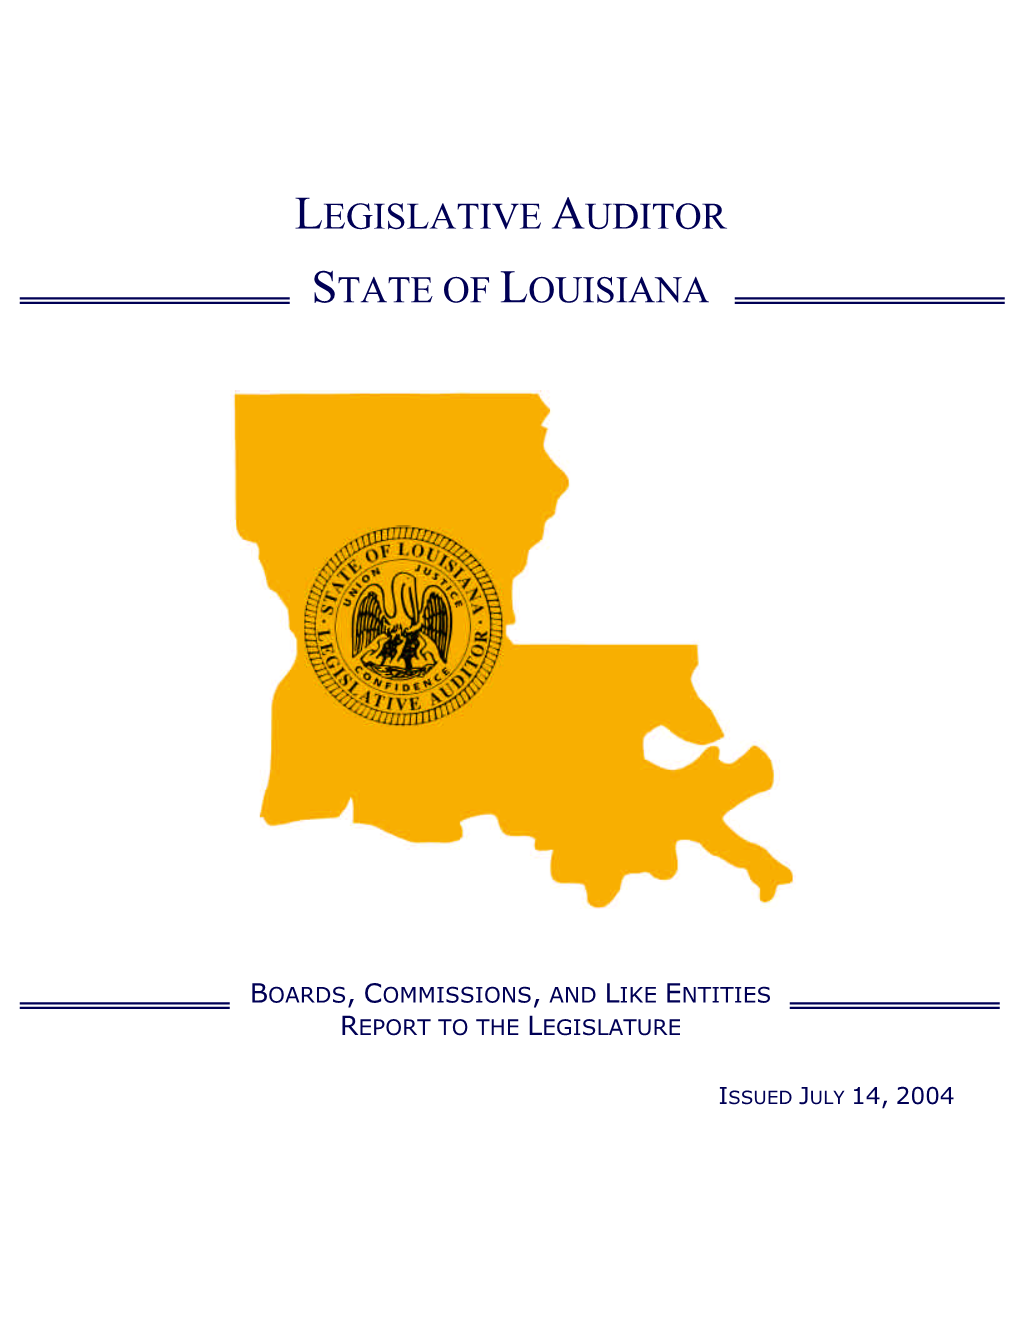 Legislative Auditor State of Louisiana